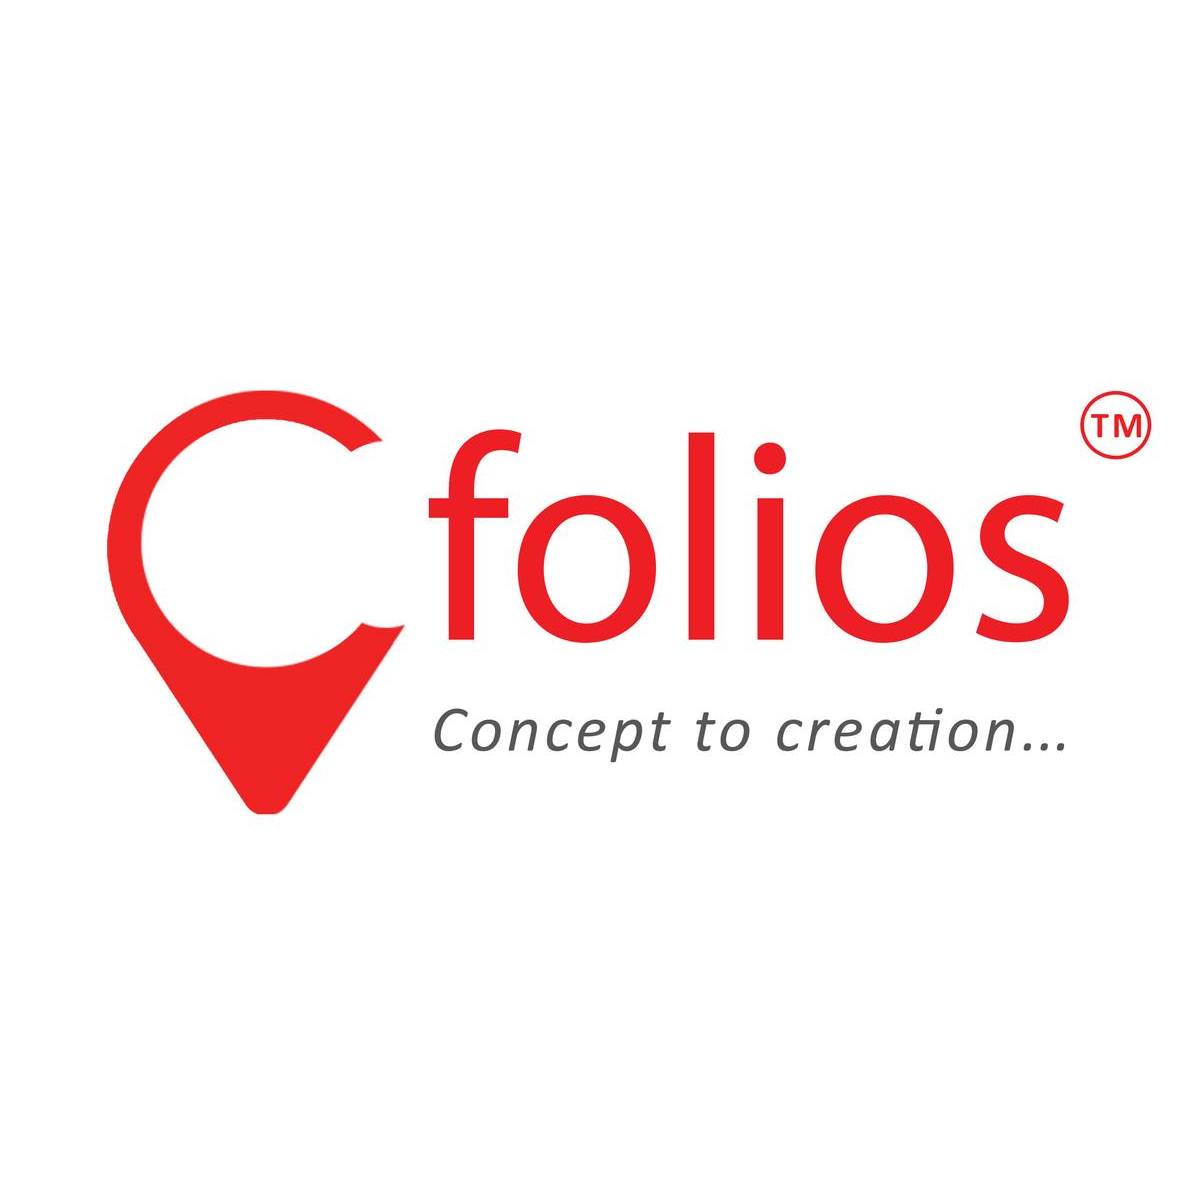 CFOLIOS DESIGN AND CONSTRUCTION SOLUTIONS PVT LTD - Logo